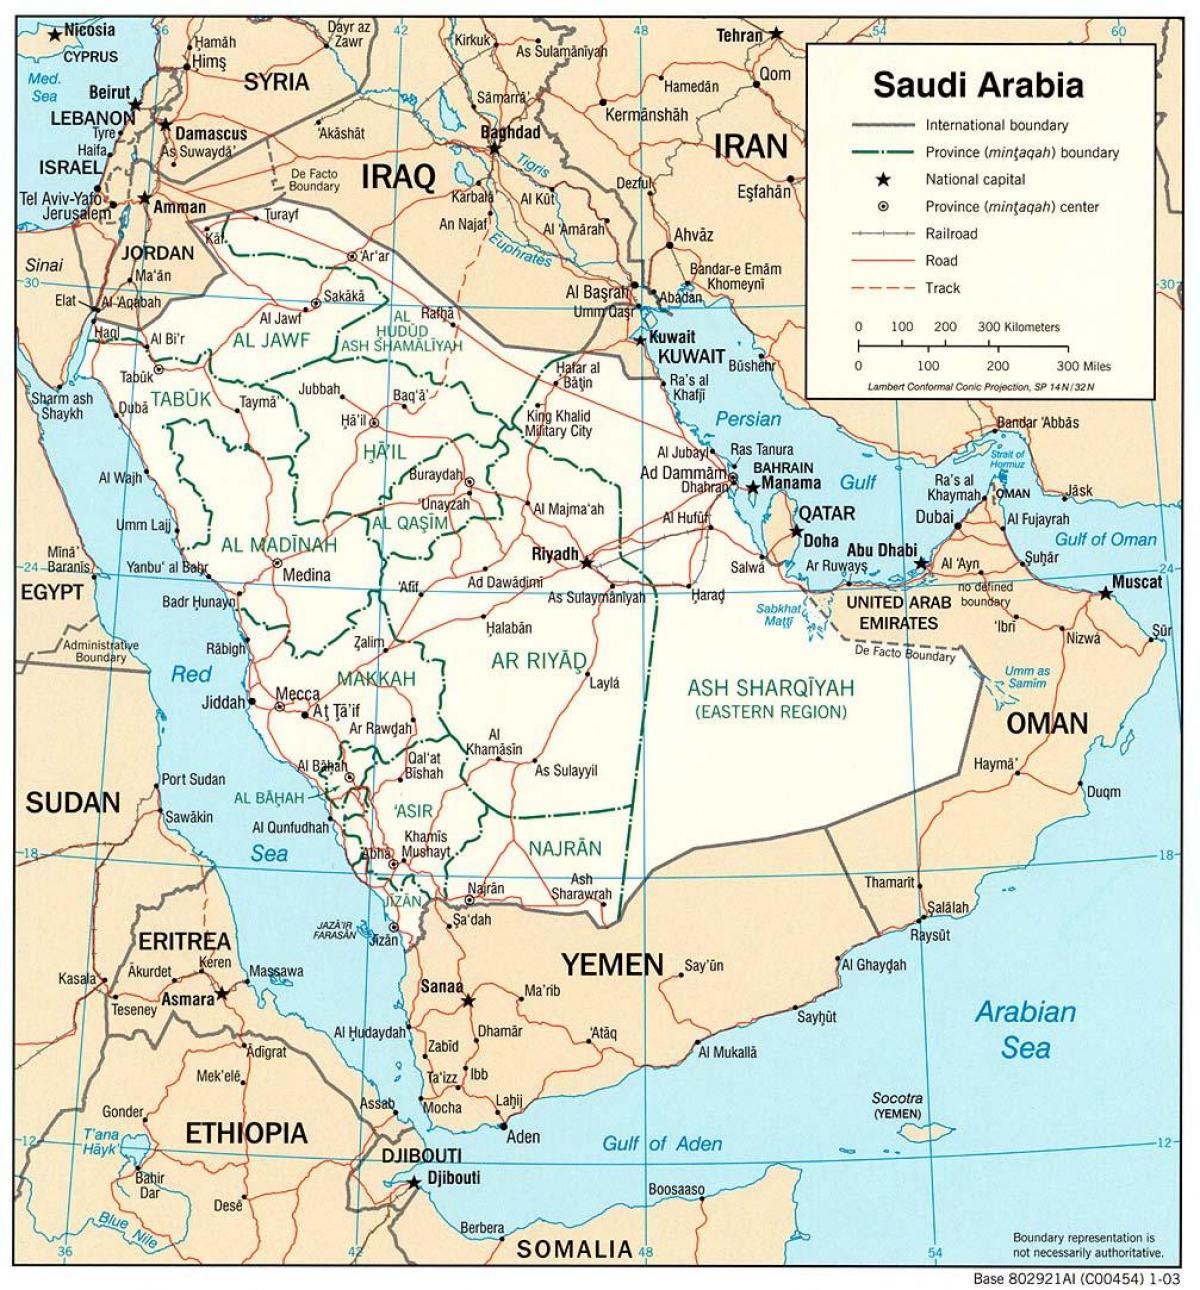 Saudi-Arabien fuld kort